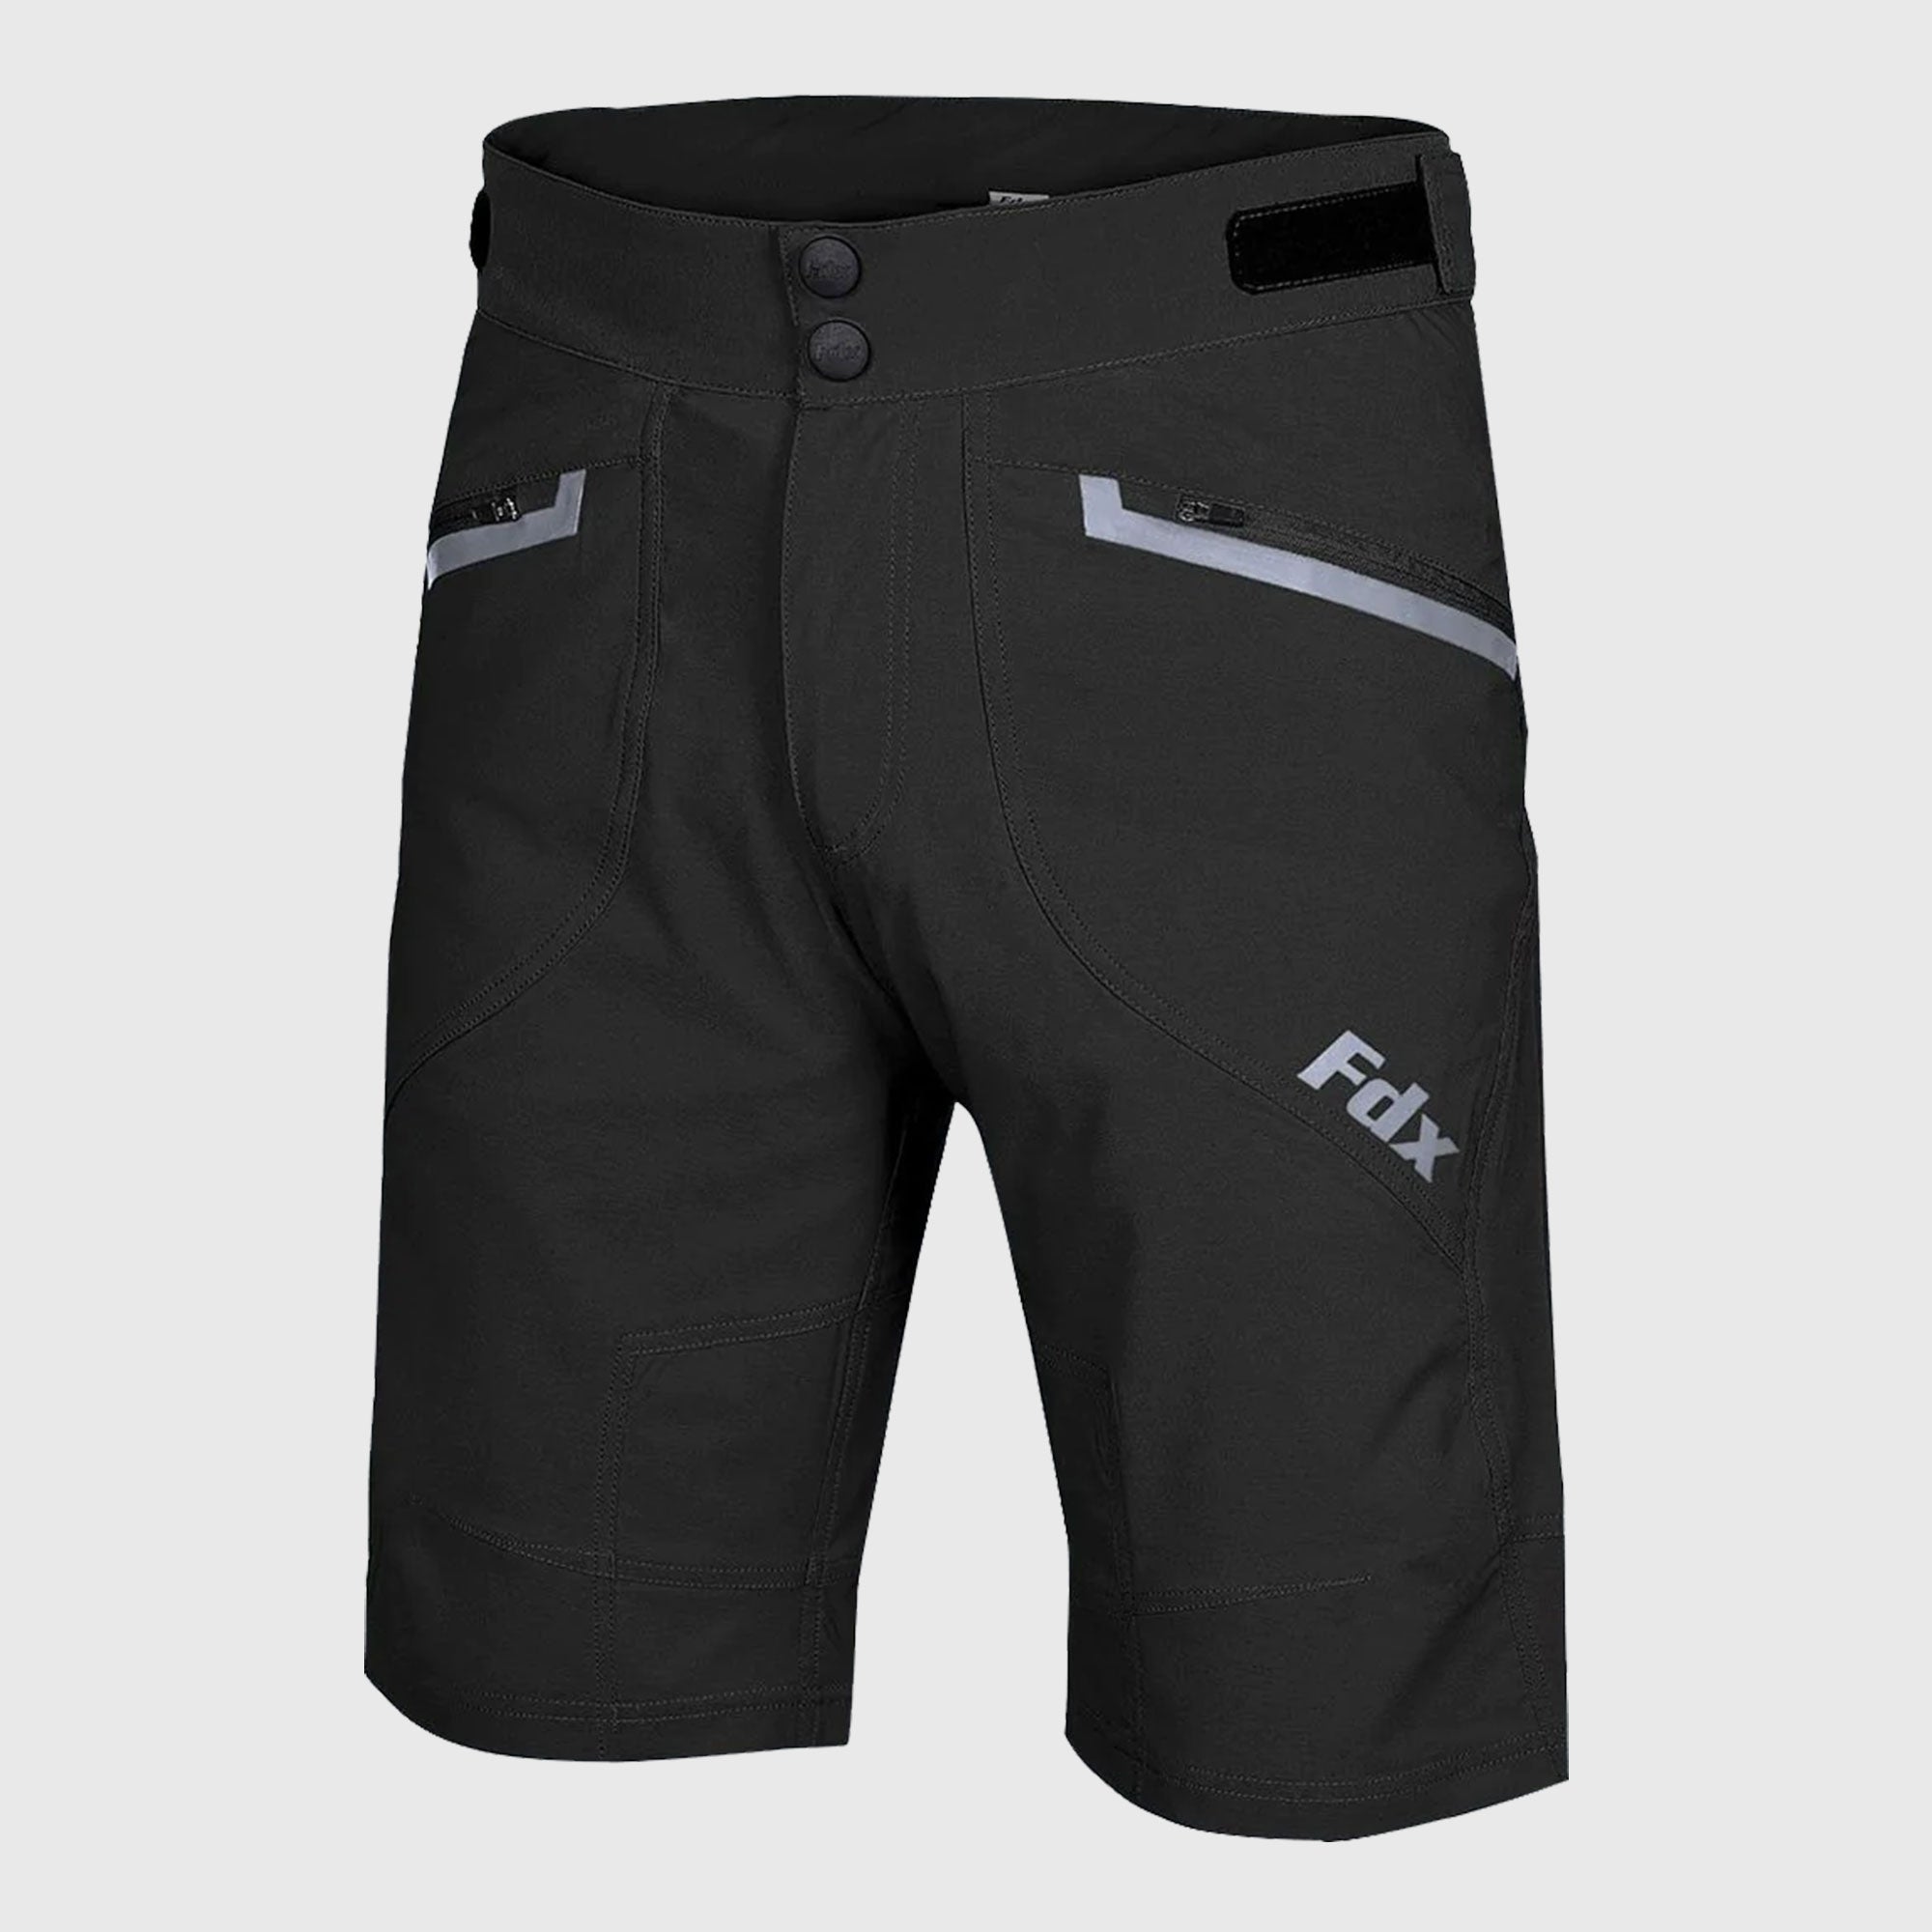 Related: Black/Grey 1 MTB shorts